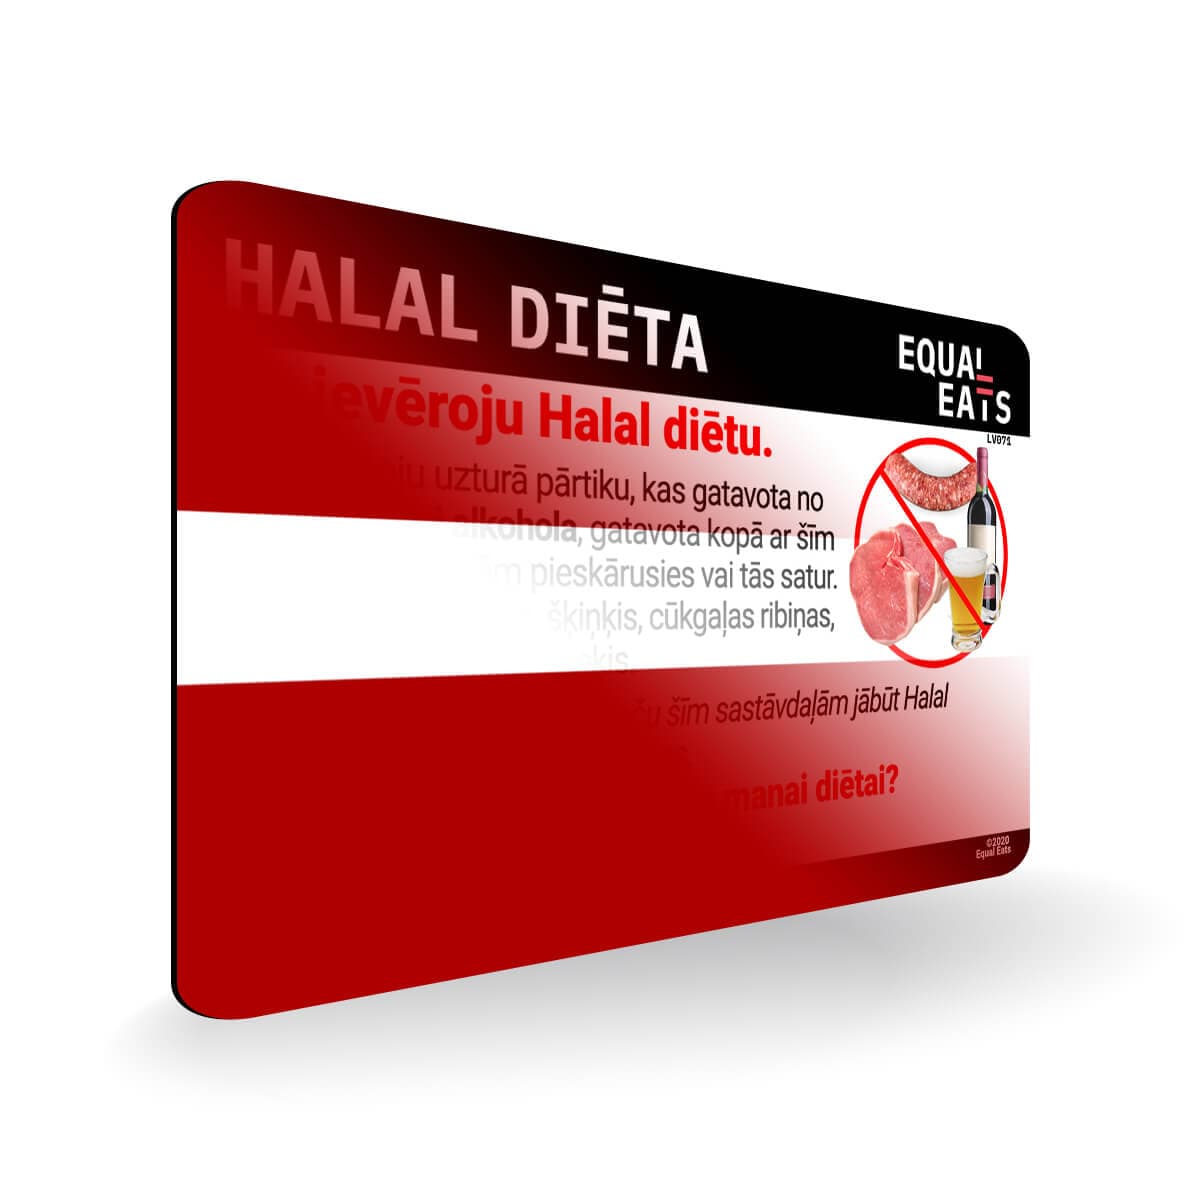 Halal Diet in Latvian. Halal Food Card for Latvia